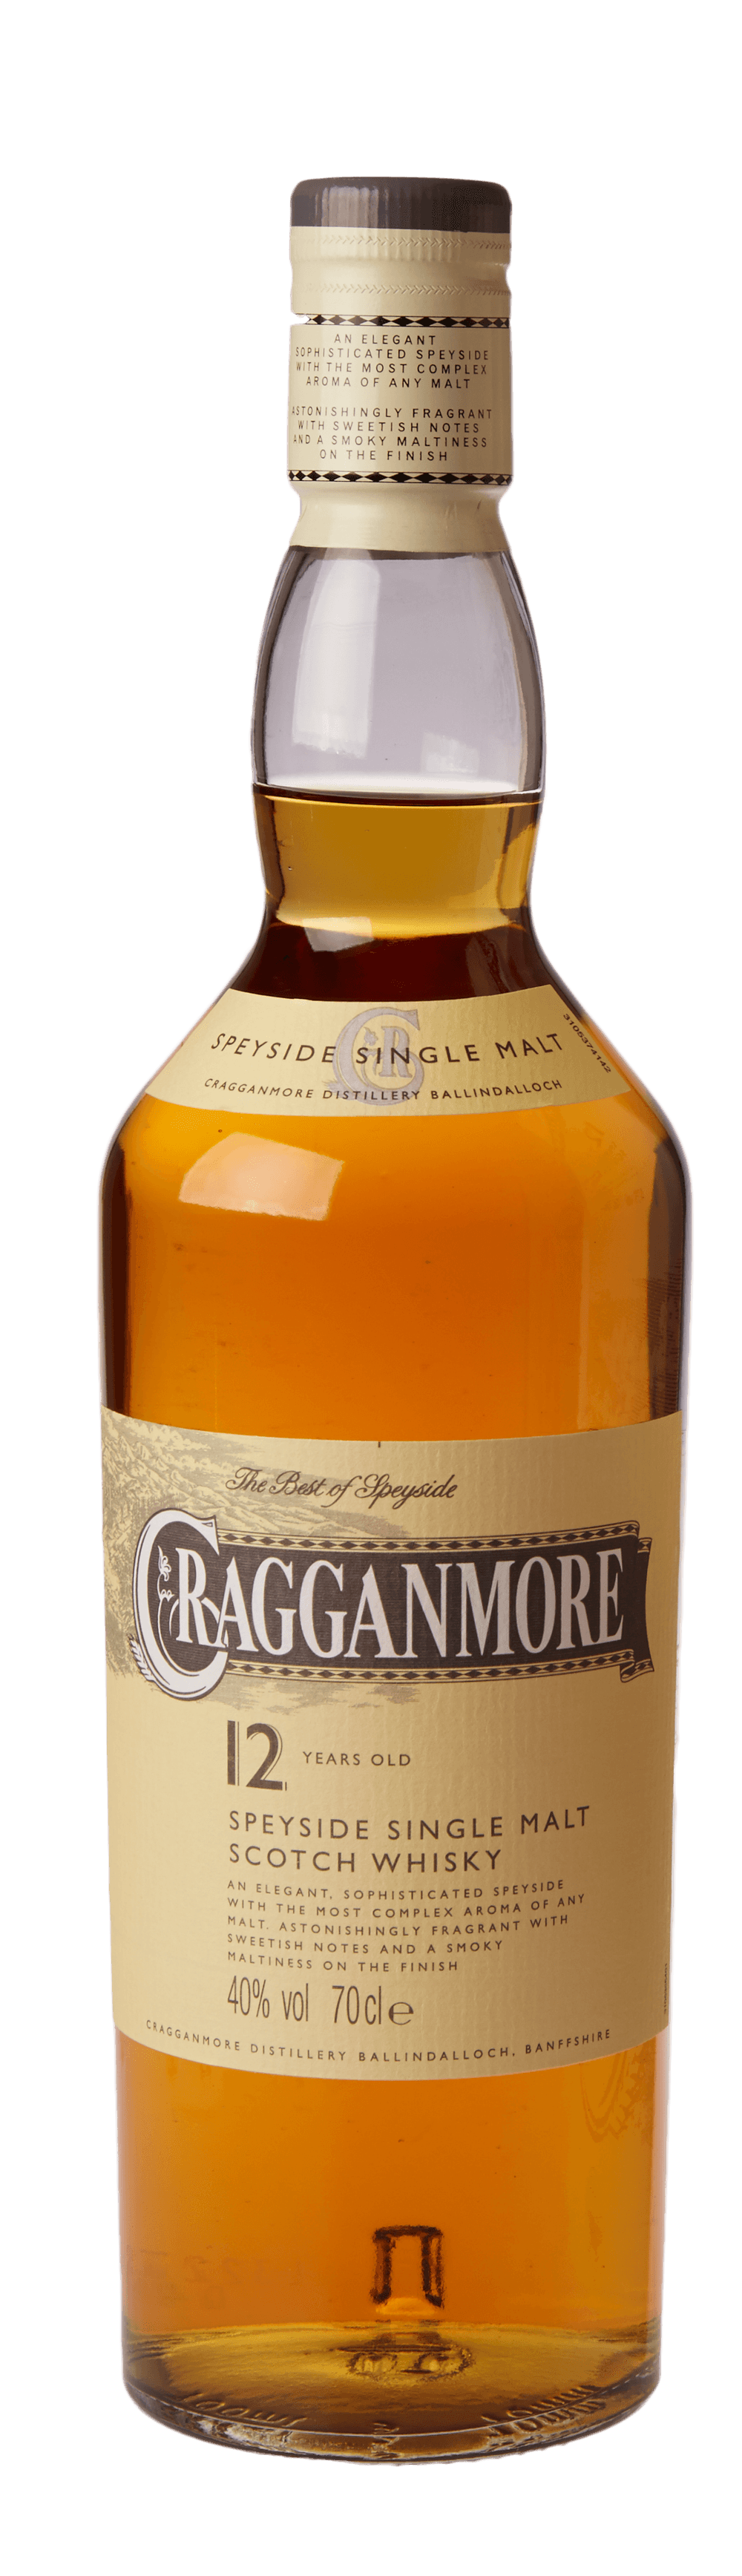 cragganmore-12-jahre-speyside-single-malt-whisky-40%-0,2-liter-2